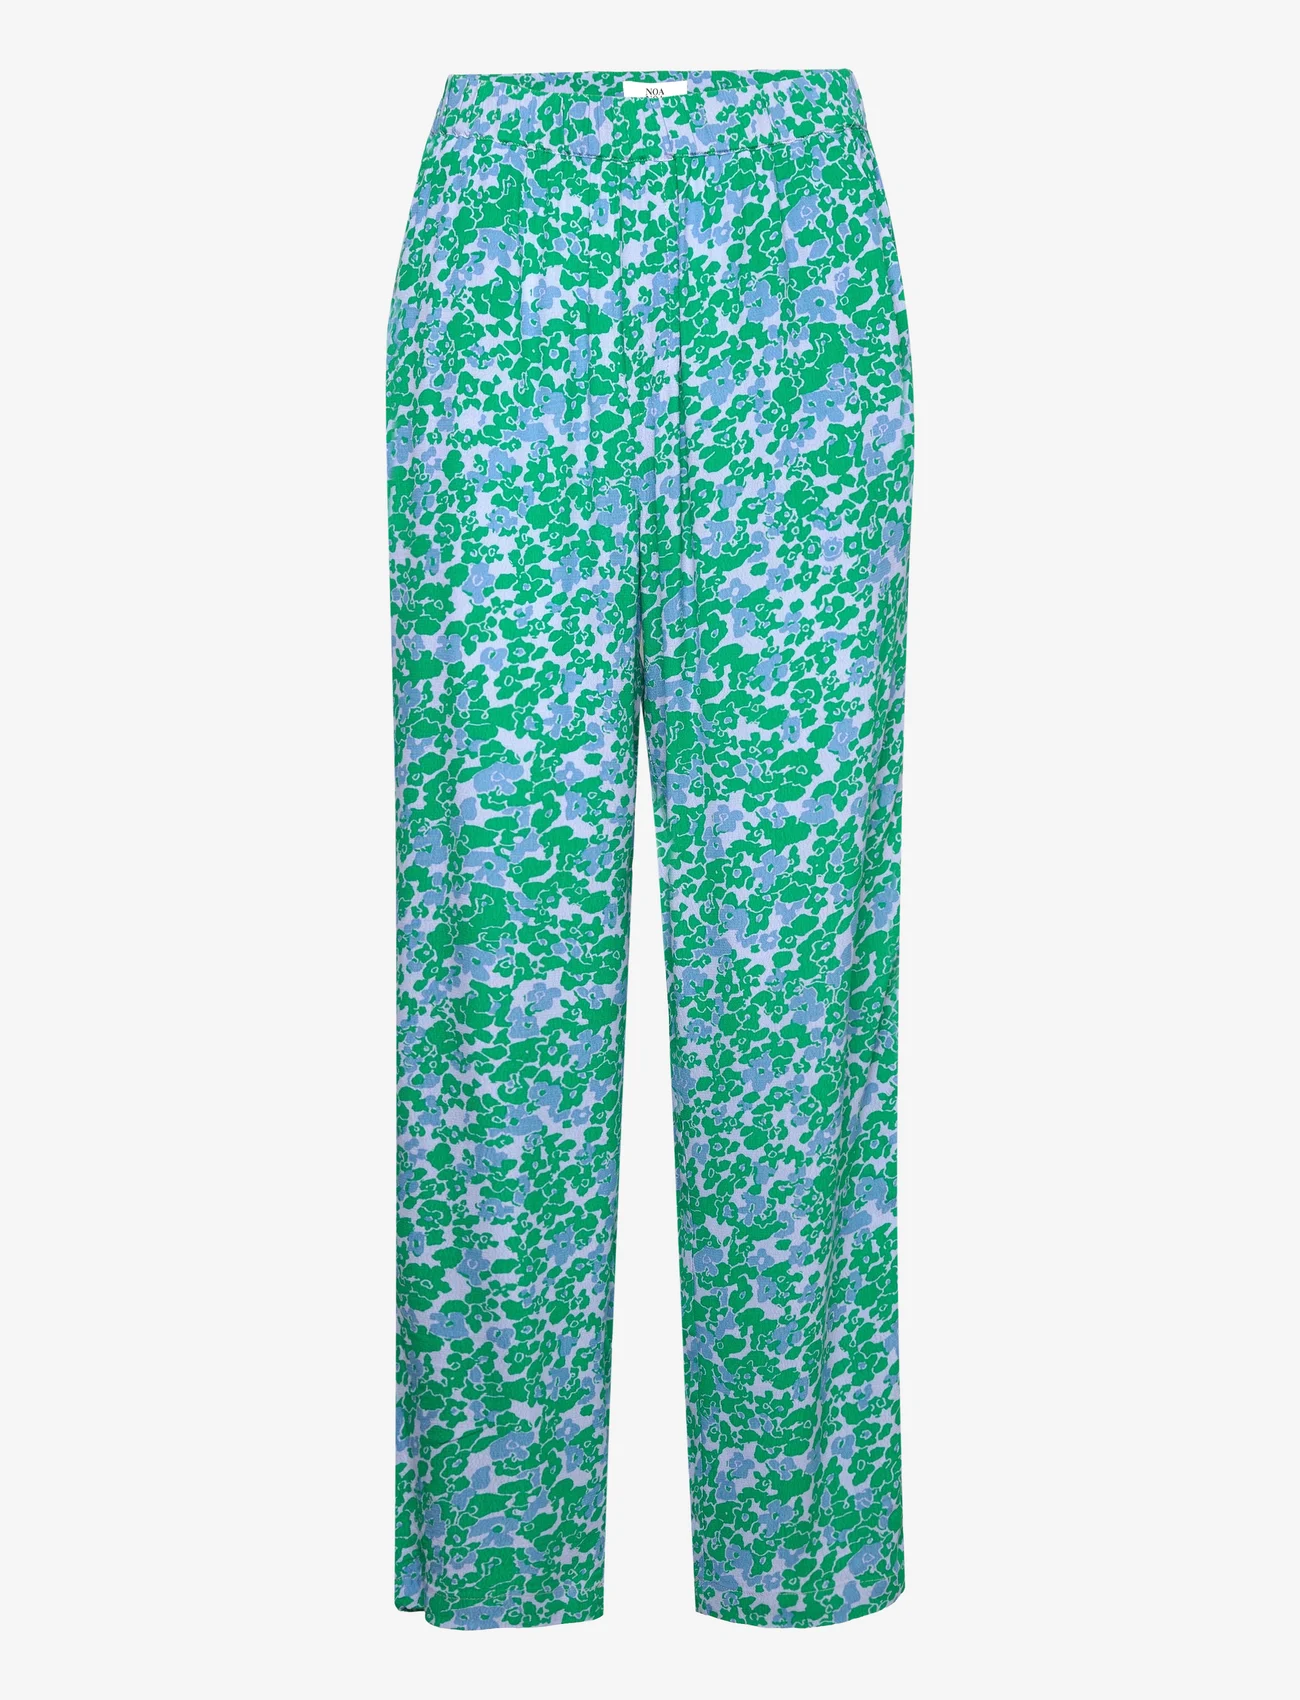 Noa Noa - BellaNN Trousers - bukser med lige ben - print blue/green - 0